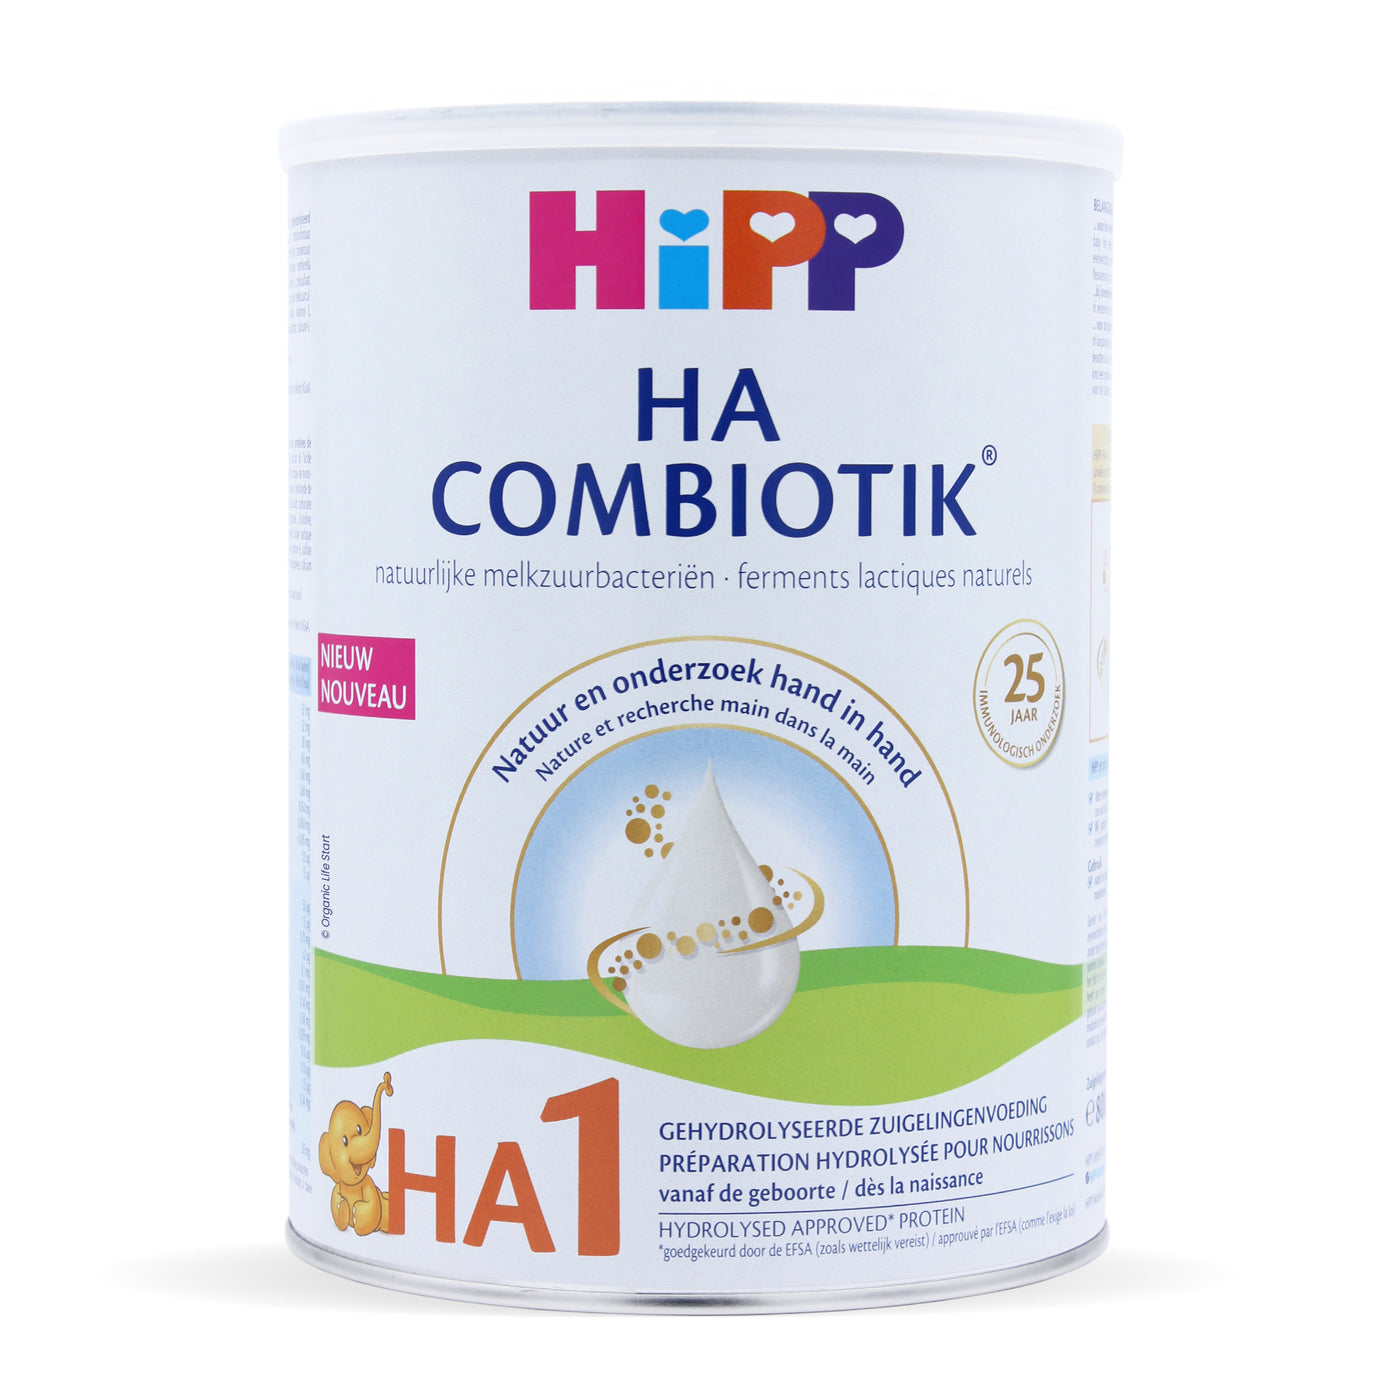 HiPP Dutch Stage 1  Bundle up & Save 30% on Organic Formula – Zen Organic  Formula